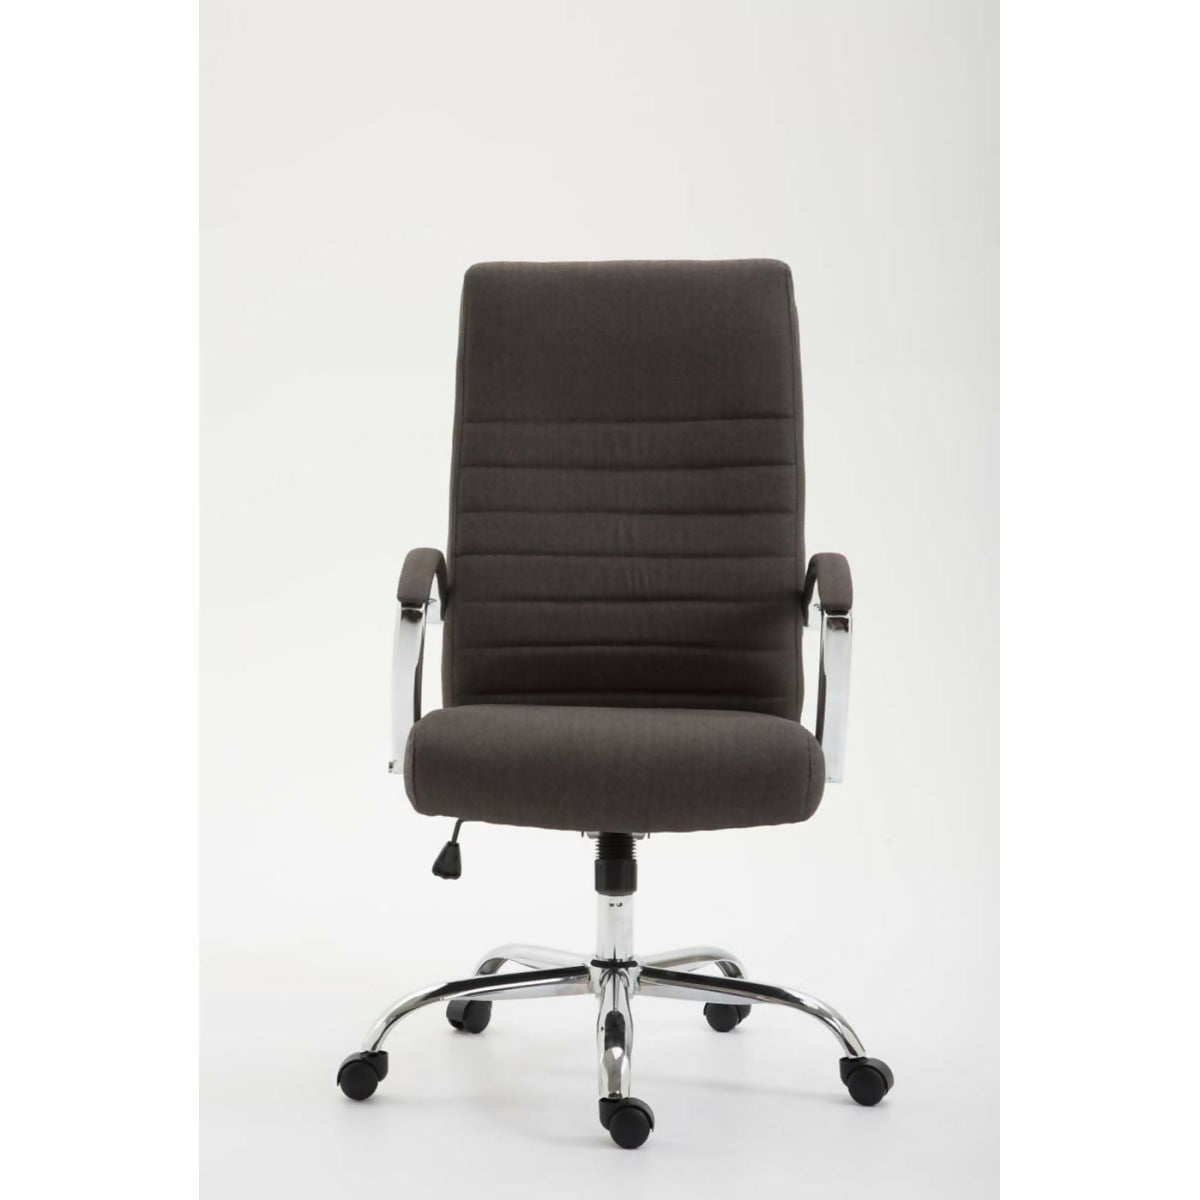 Valais office armchair - Dark gray fabric - 0